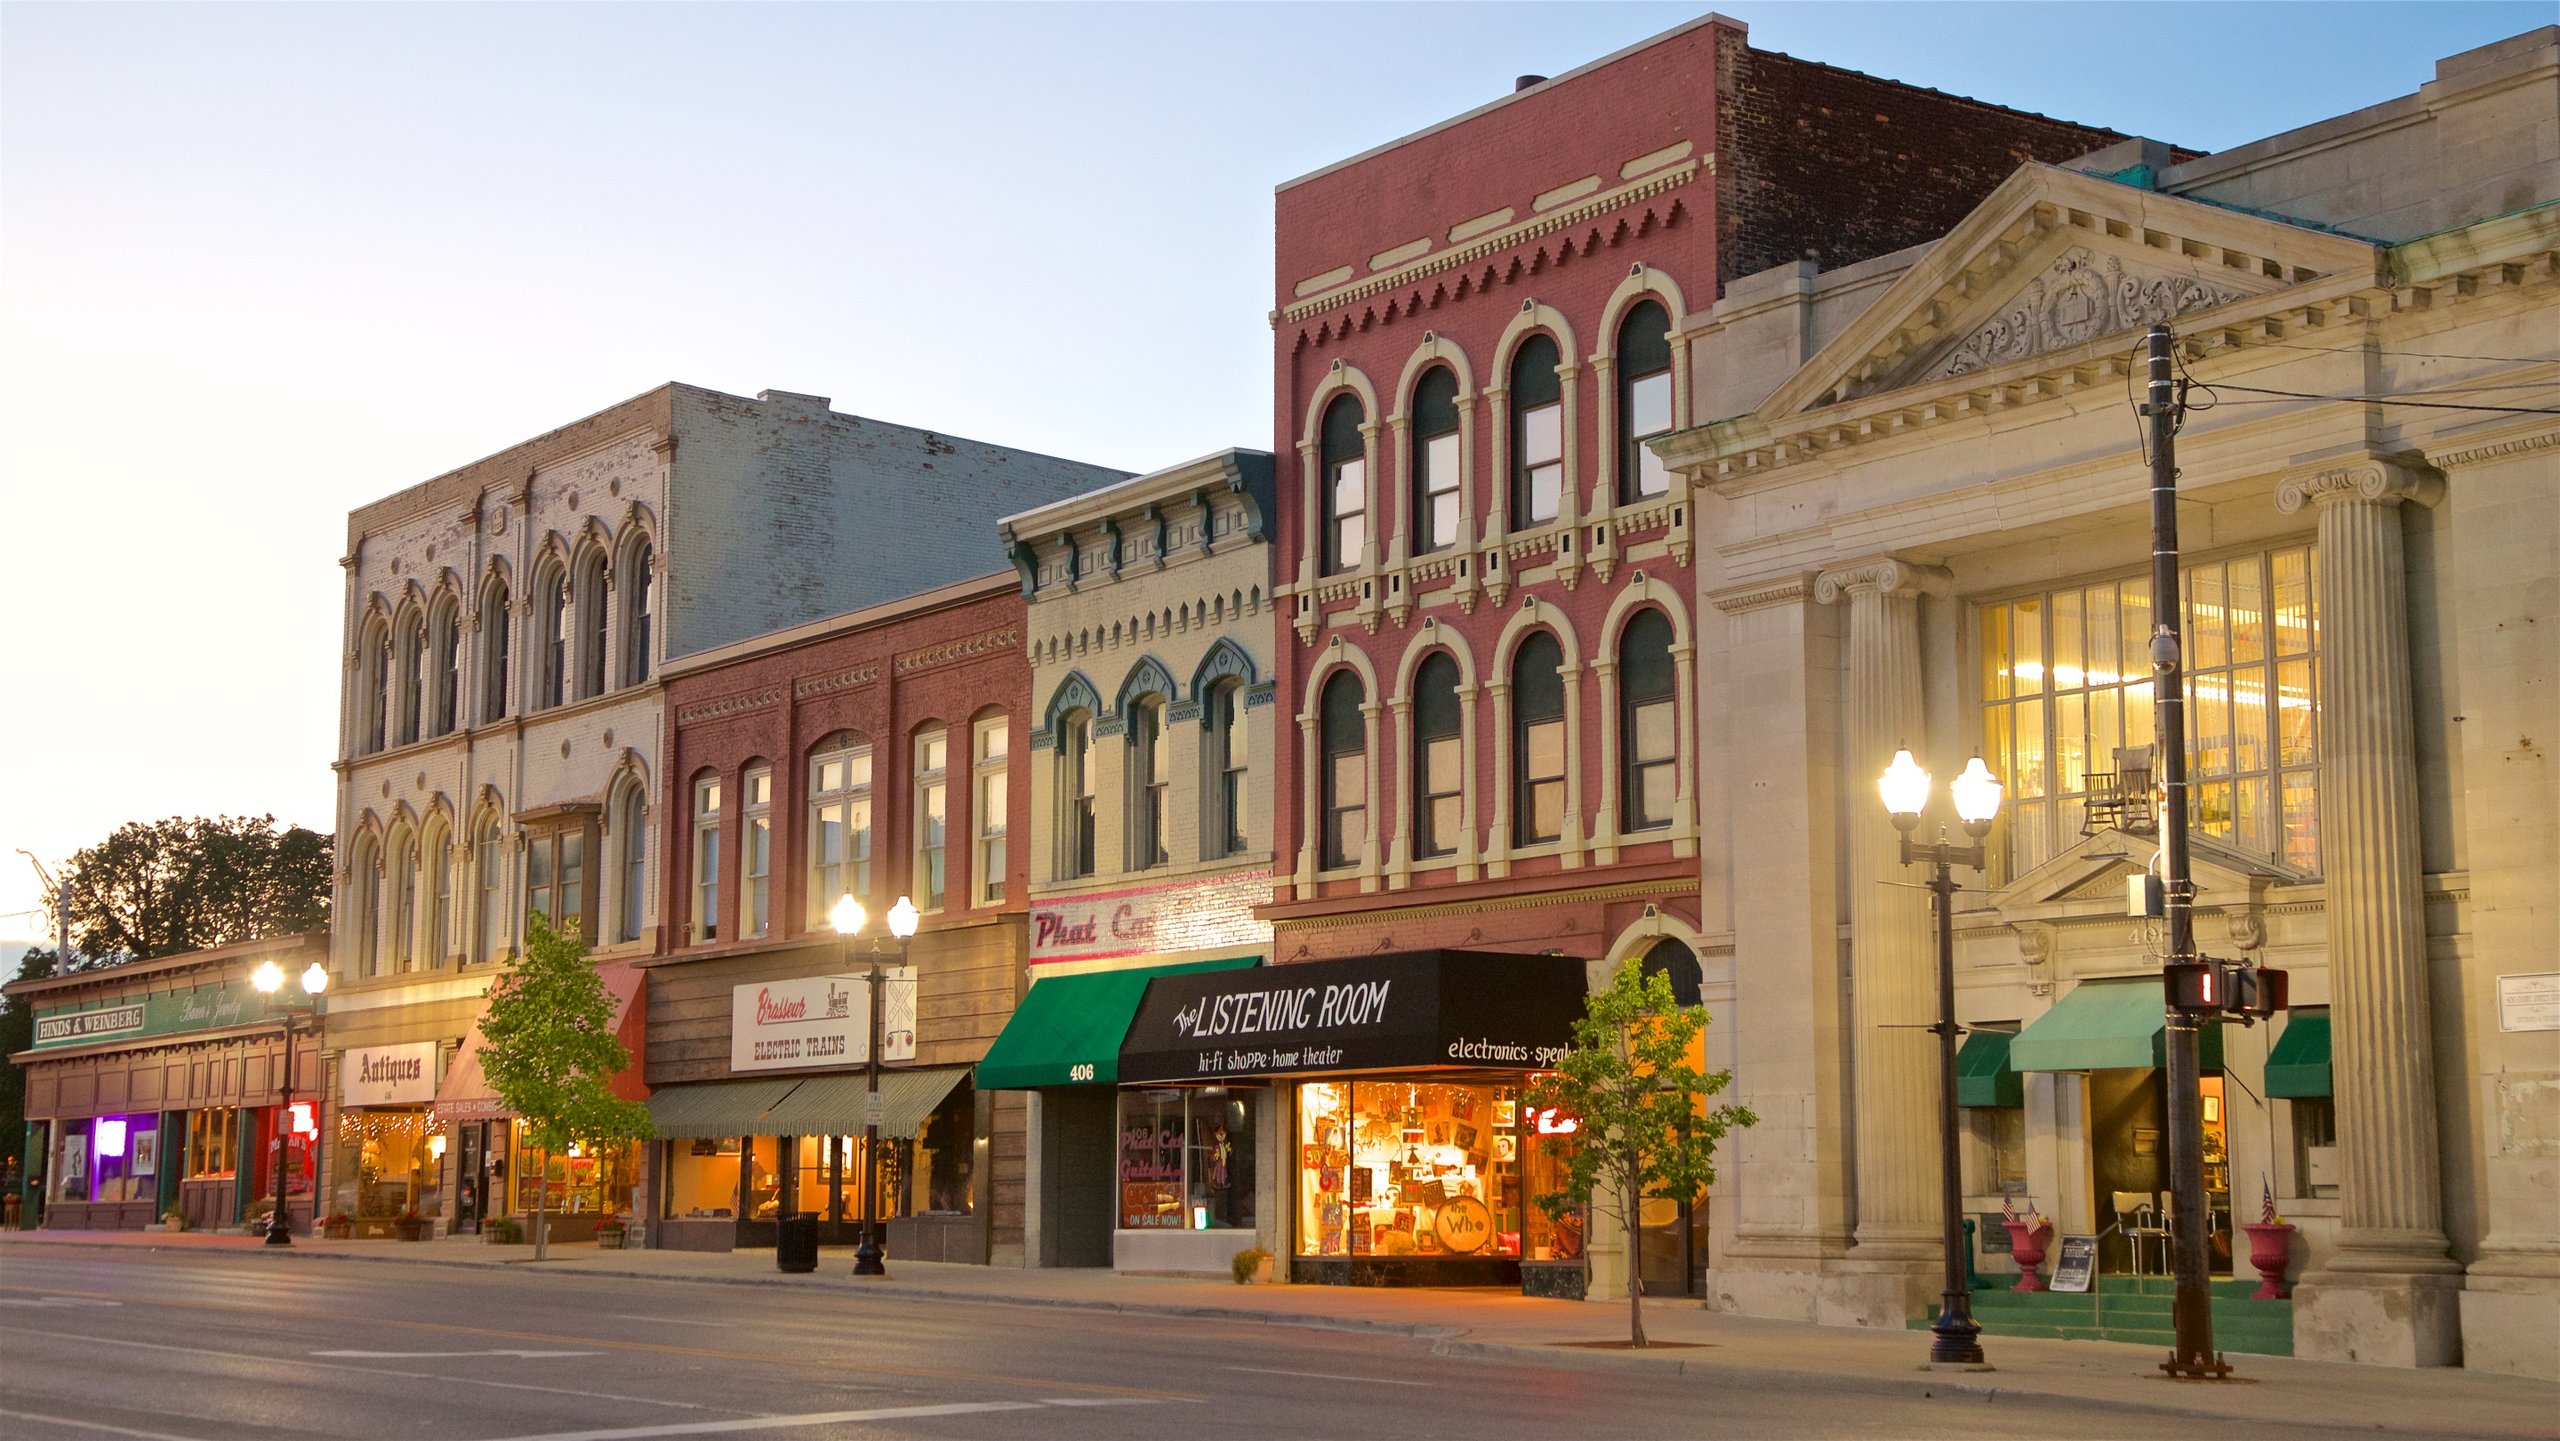 Old downtown buildings in Saginaw, Michigan.